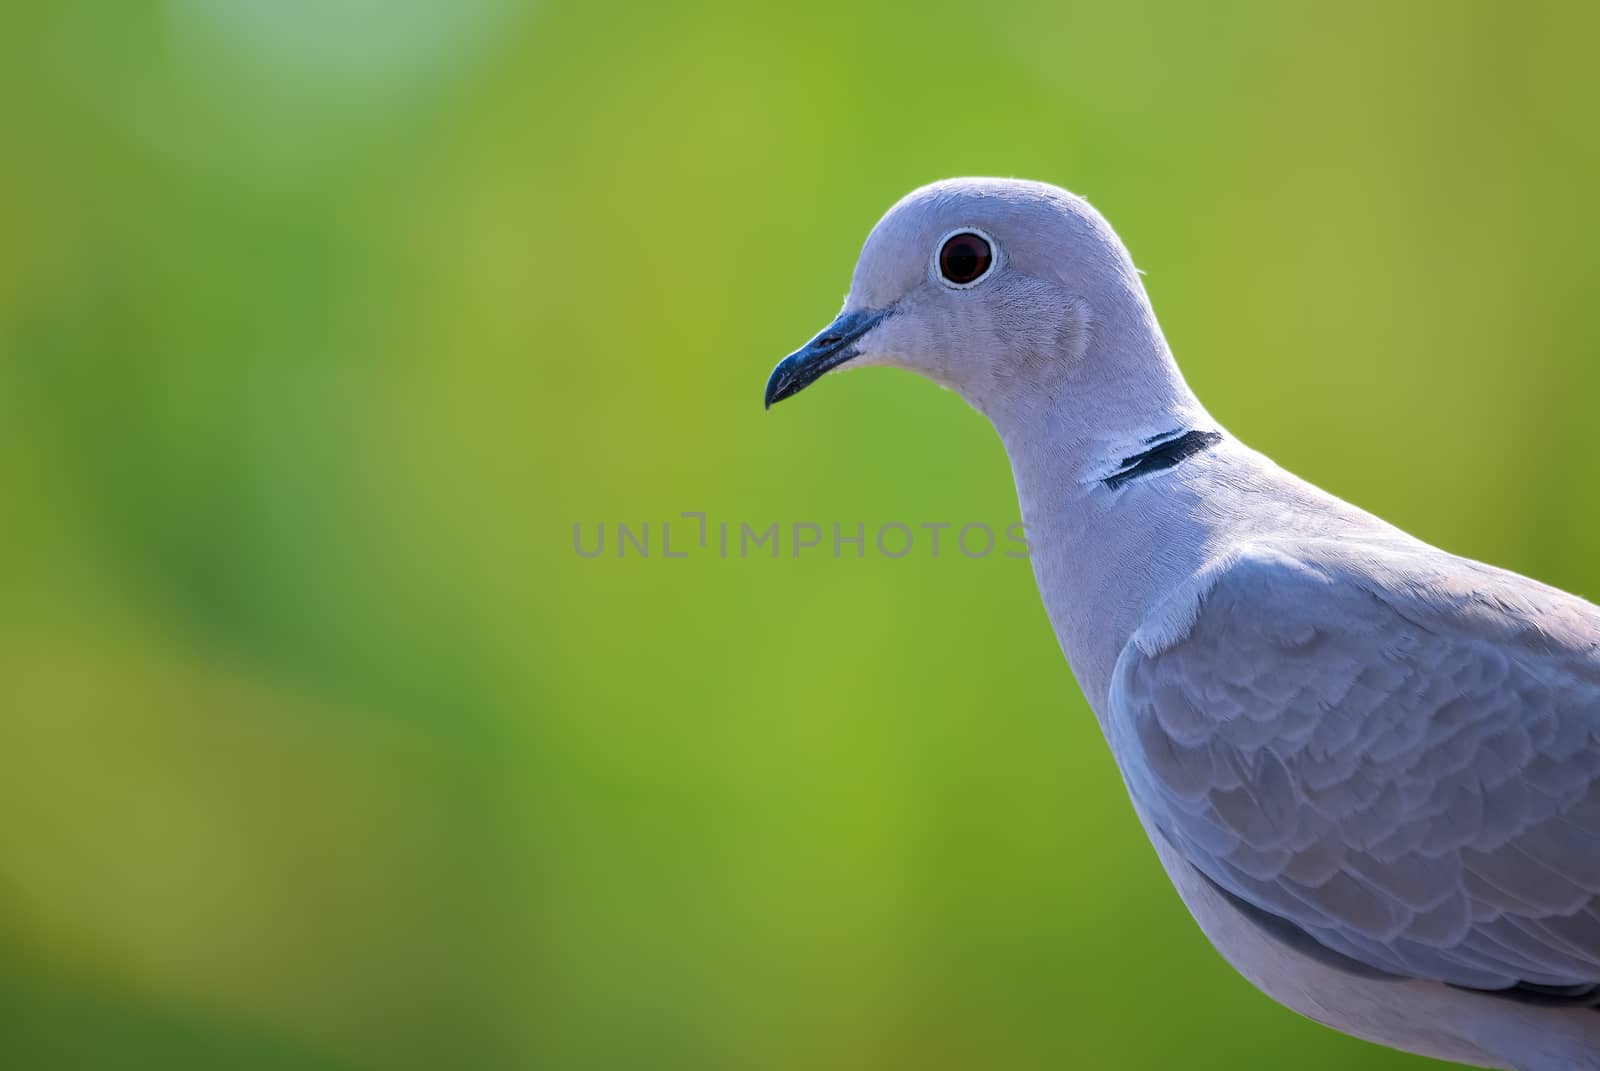 Eurasian collared dove portrait by rkbalaji